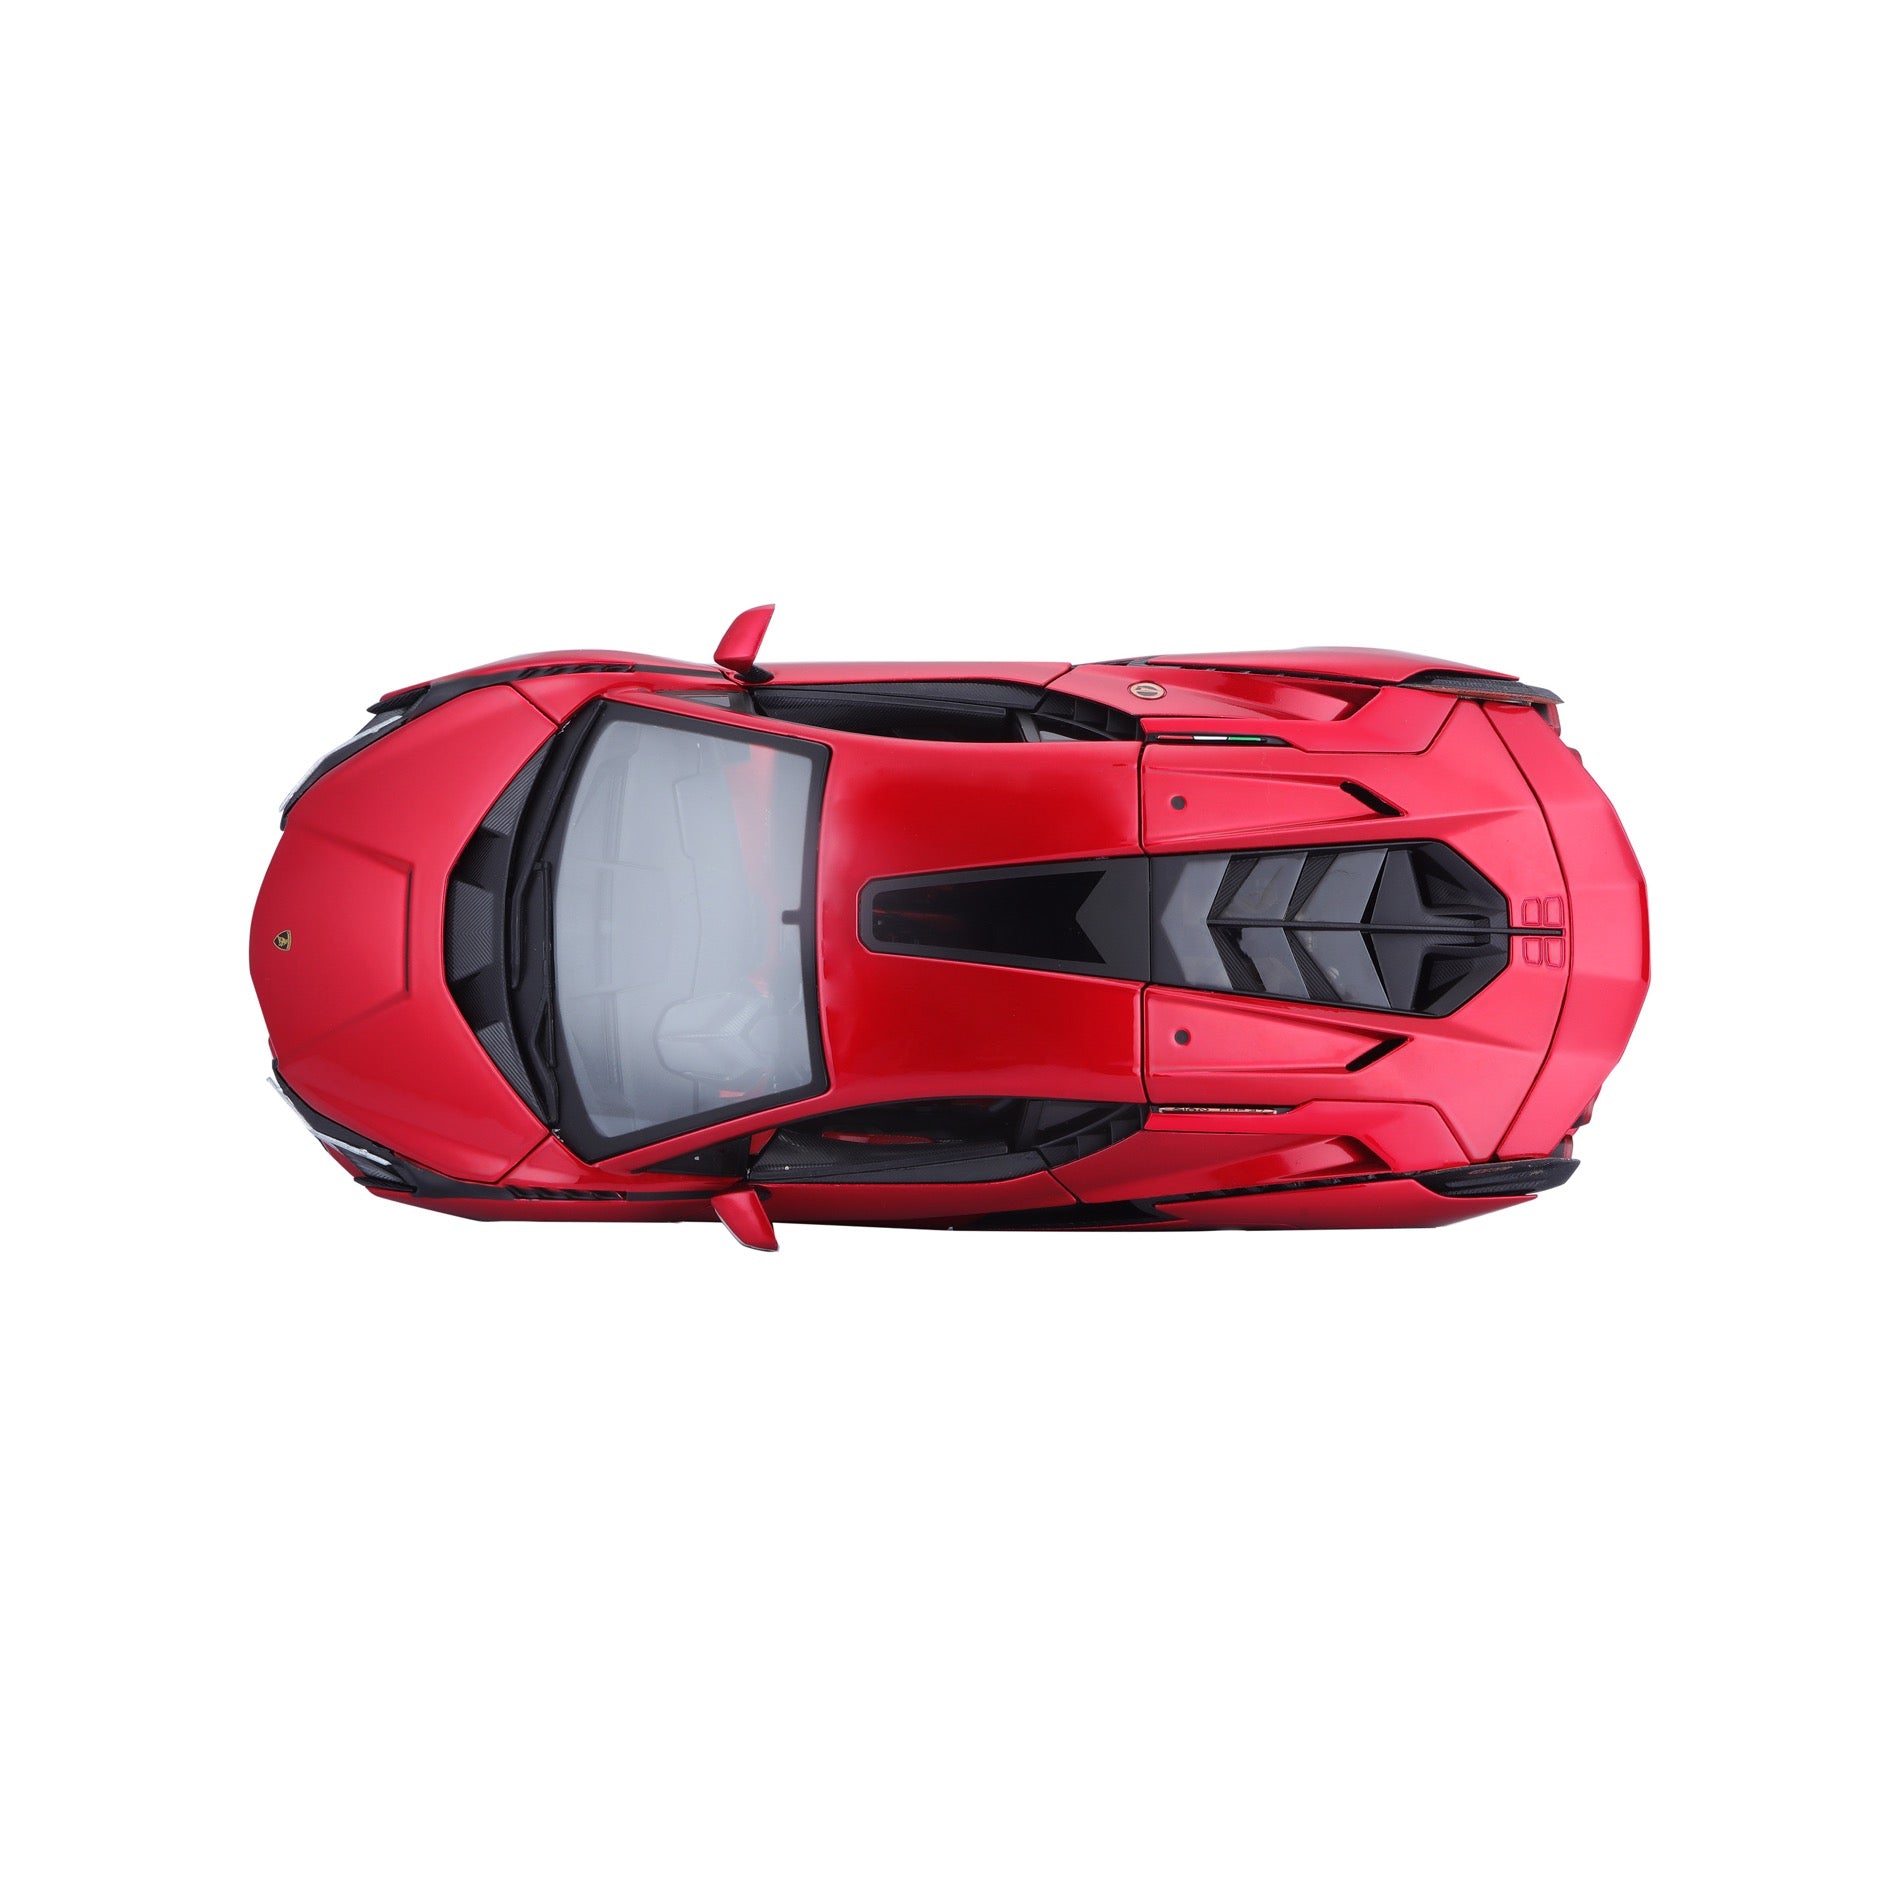 18-11046 RD - Bburago - 1:18 - Lamborghini Sin FKP 37 - Rossa